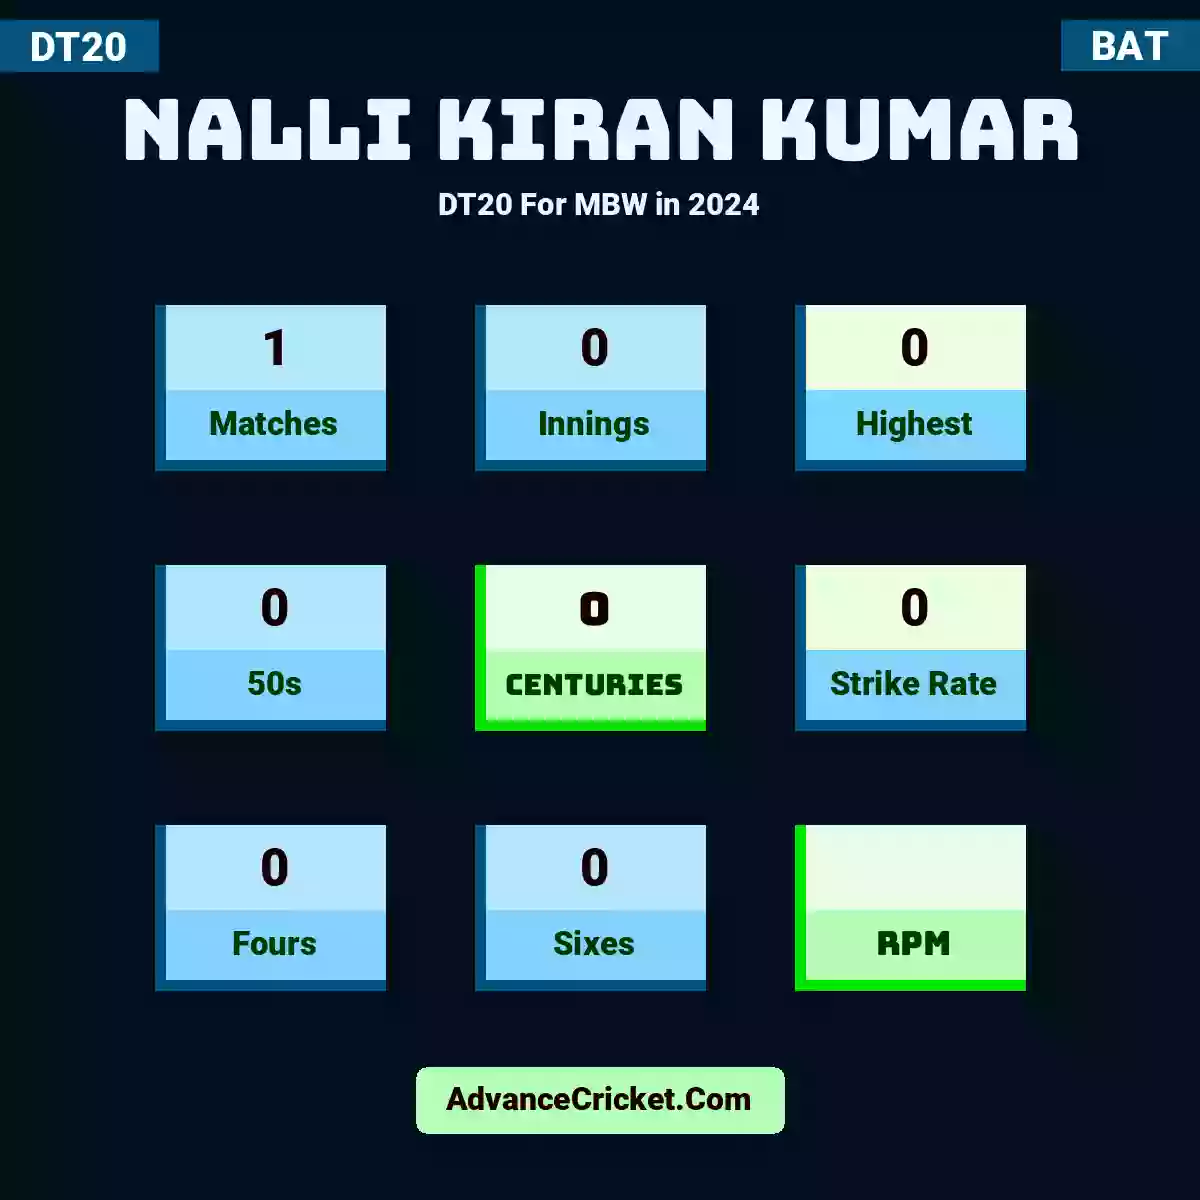 Nalli Kiran Kumar DT20  For MBW in 2024, Nalli Kiran Kumar played 1 matches, scored 0 runs as highest, 0 half-centuries, and 0 centuries, with a strike rate of 0. N.Kiran.Kumar hit 0 fours and 0 sixes.